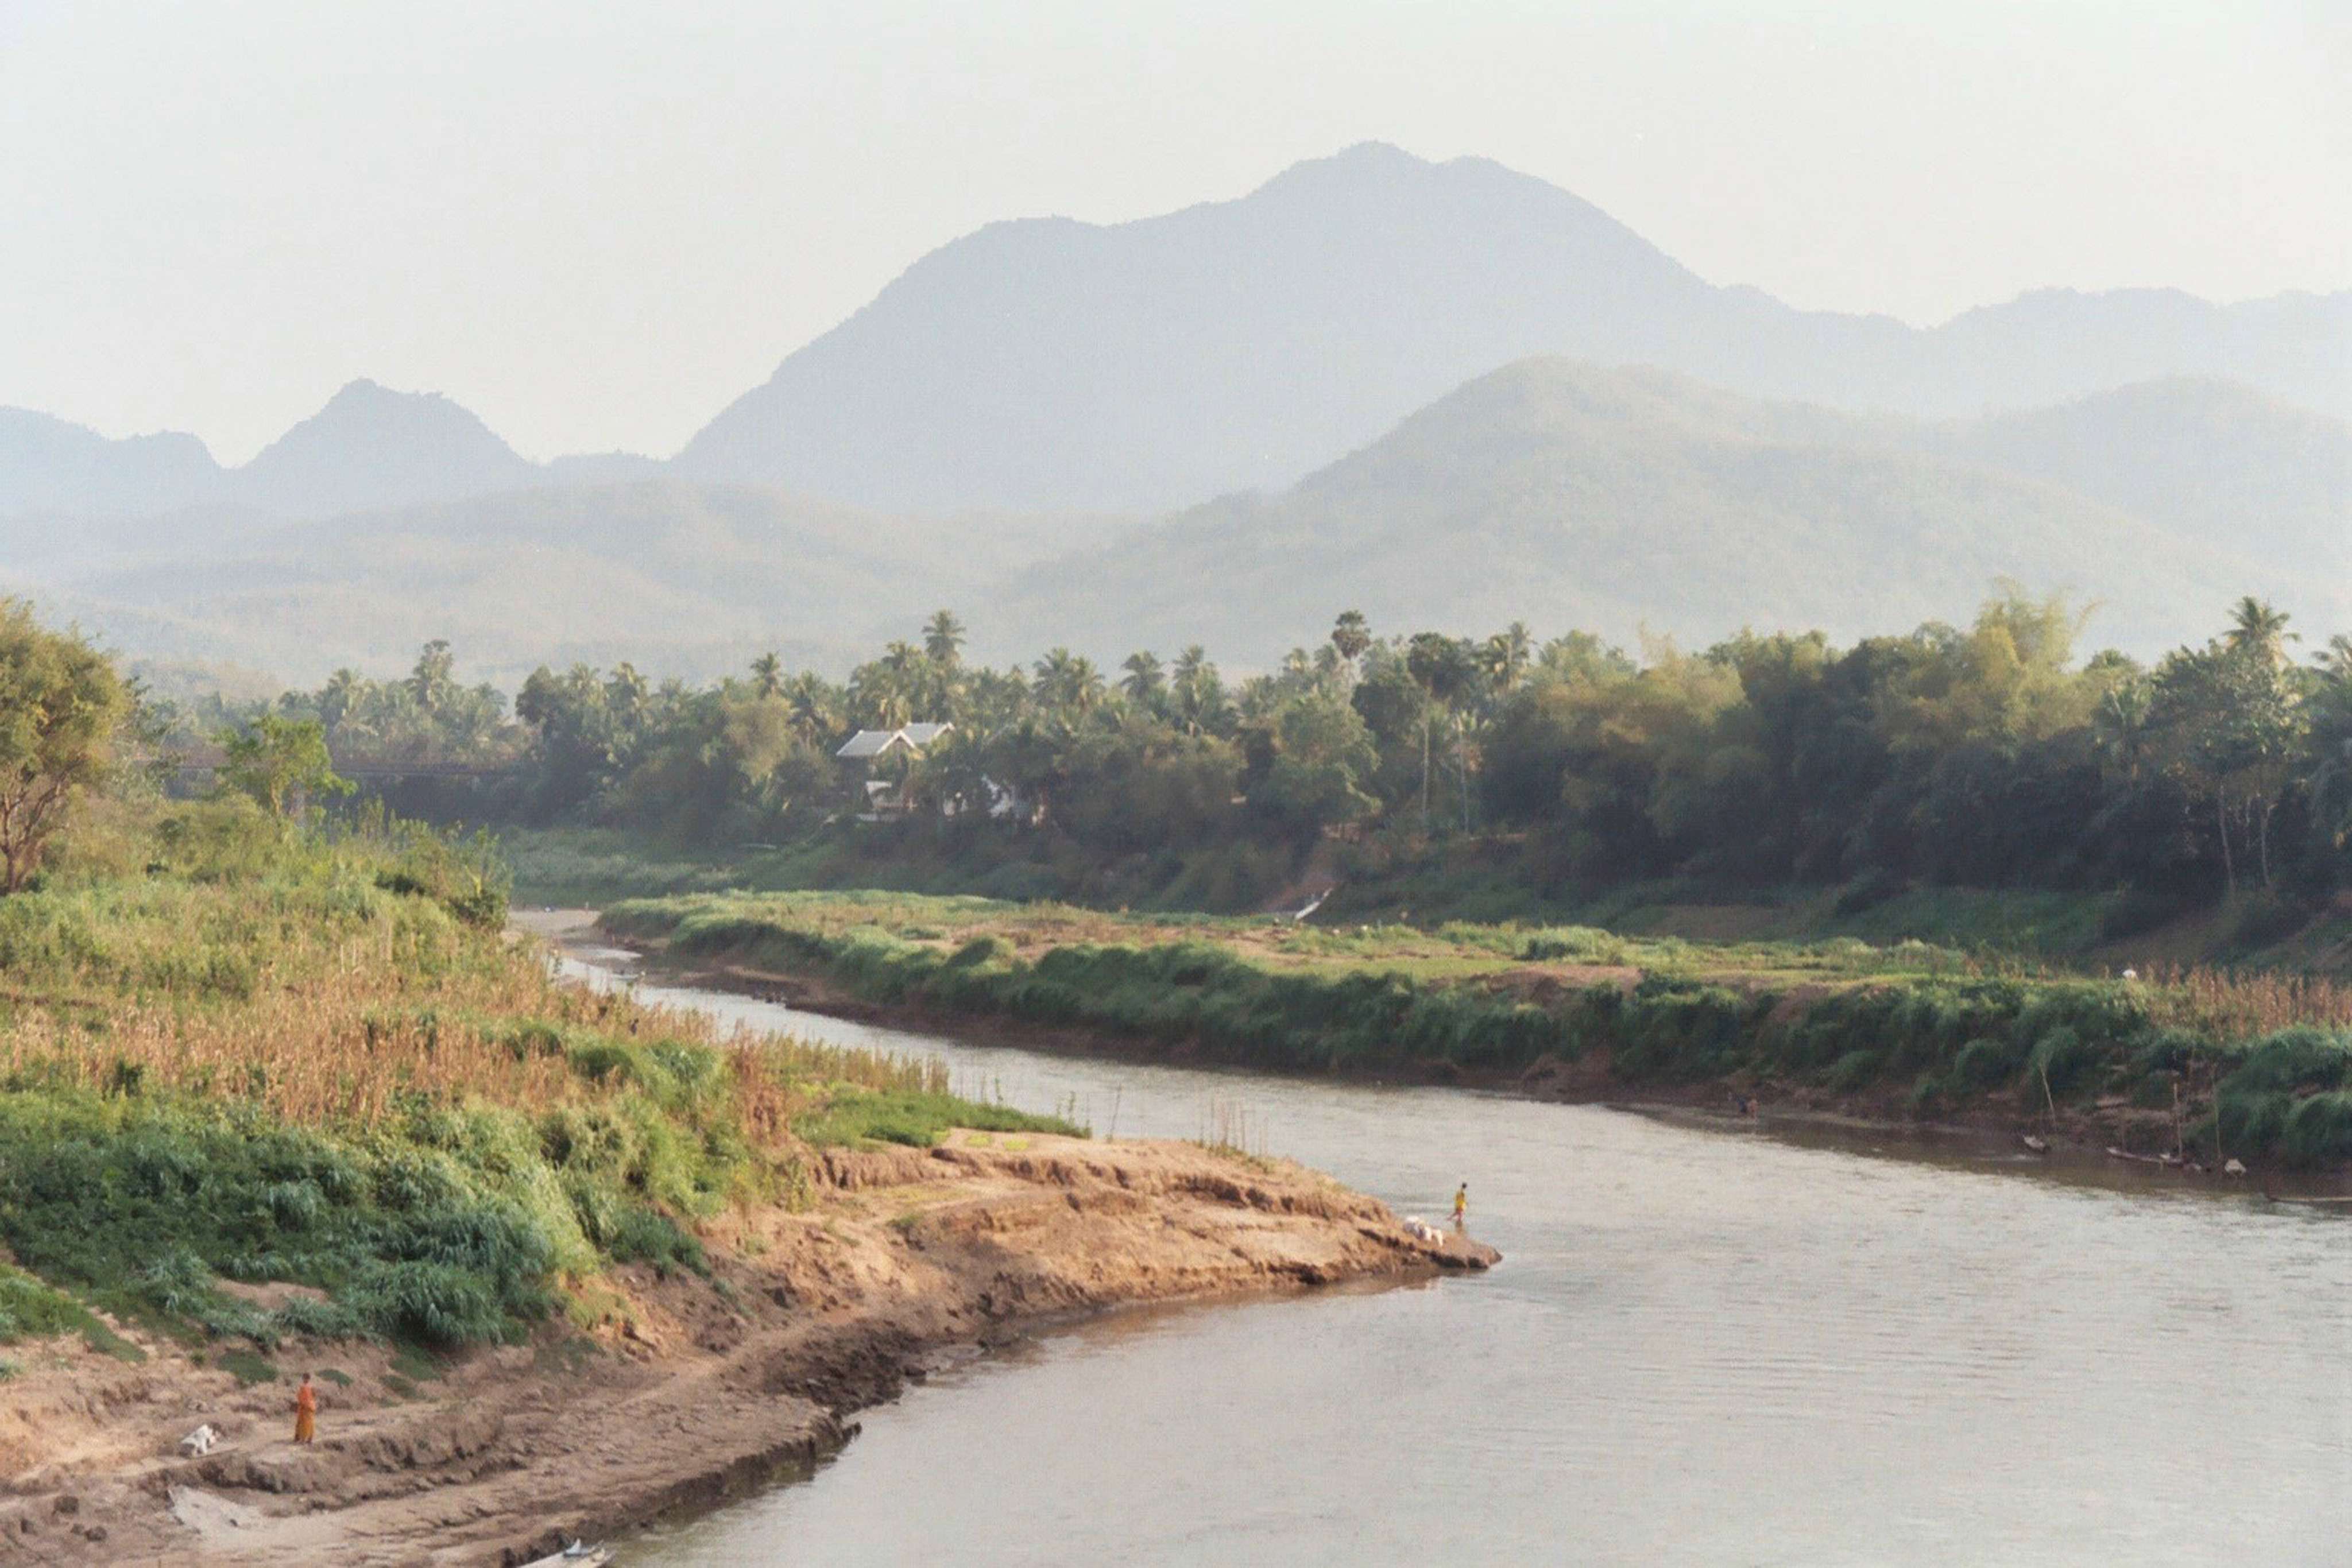 Mekong river landscape near Luang Prabang, Laos © Peter Denton/WWF-Canon